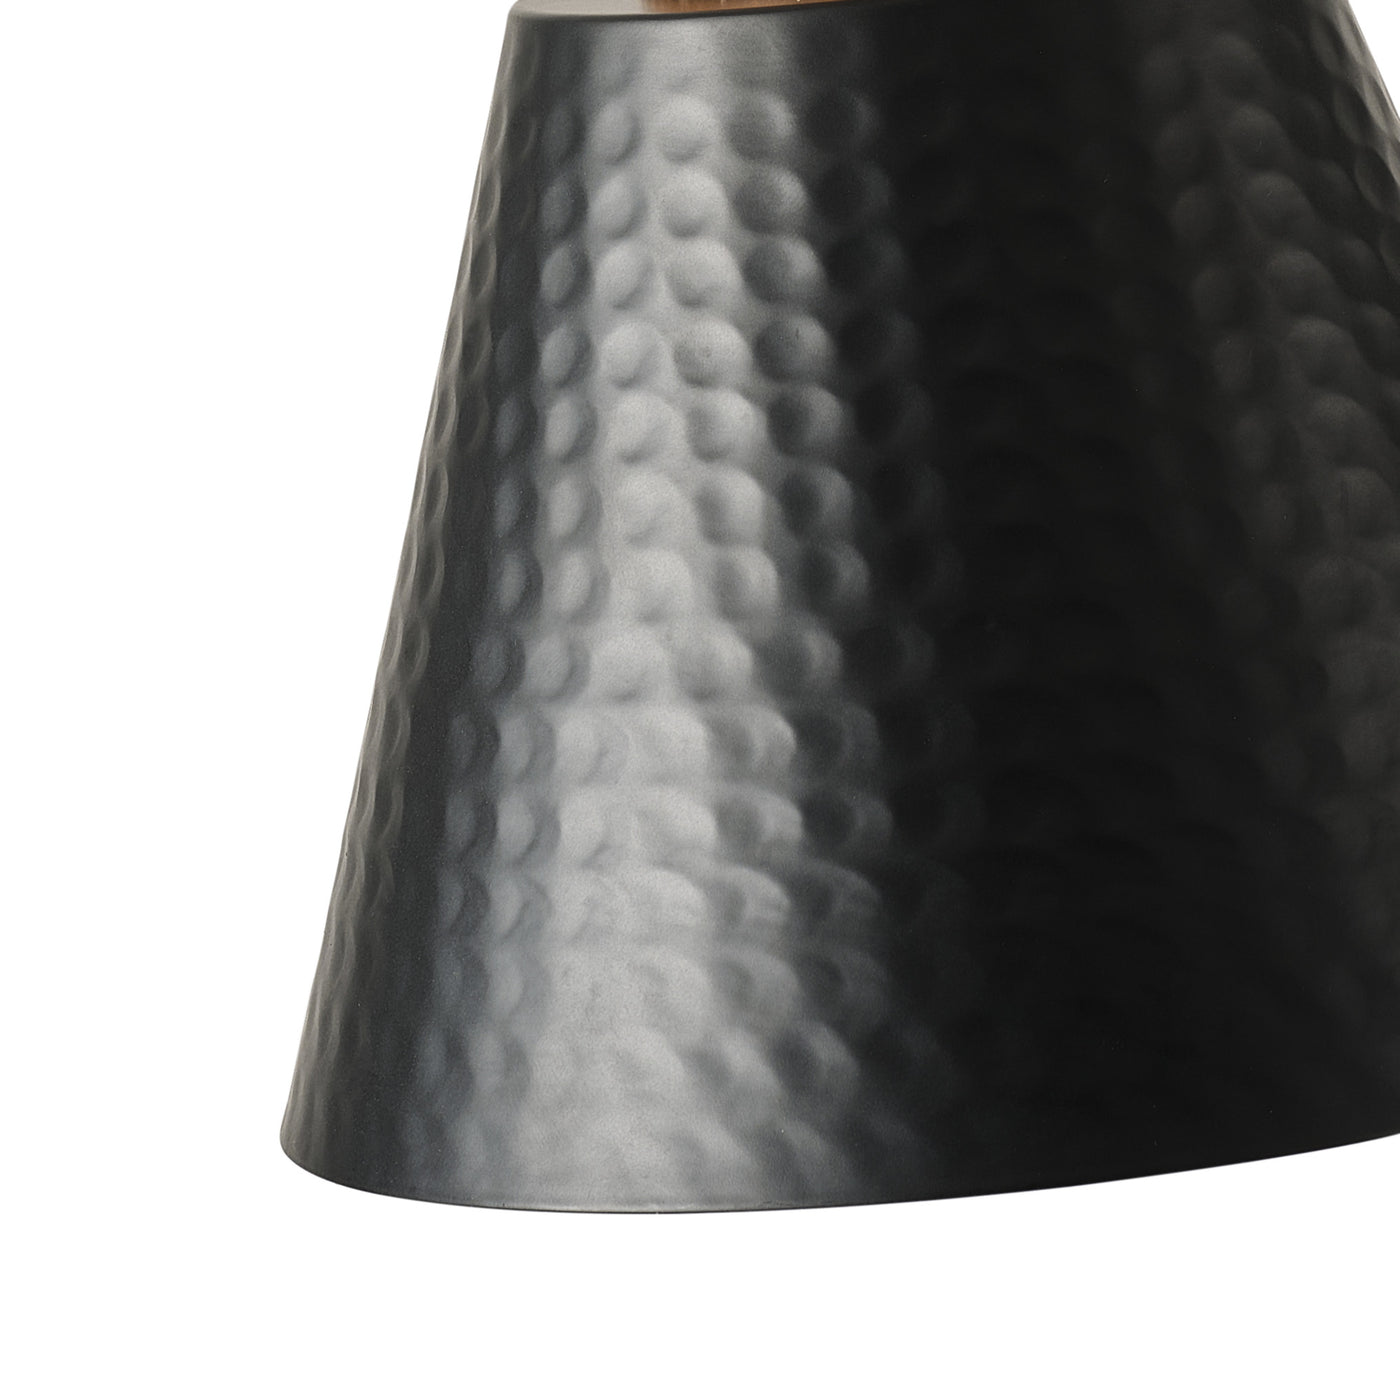 1-Light Conical Polka Dot Shade Pendant Lighting